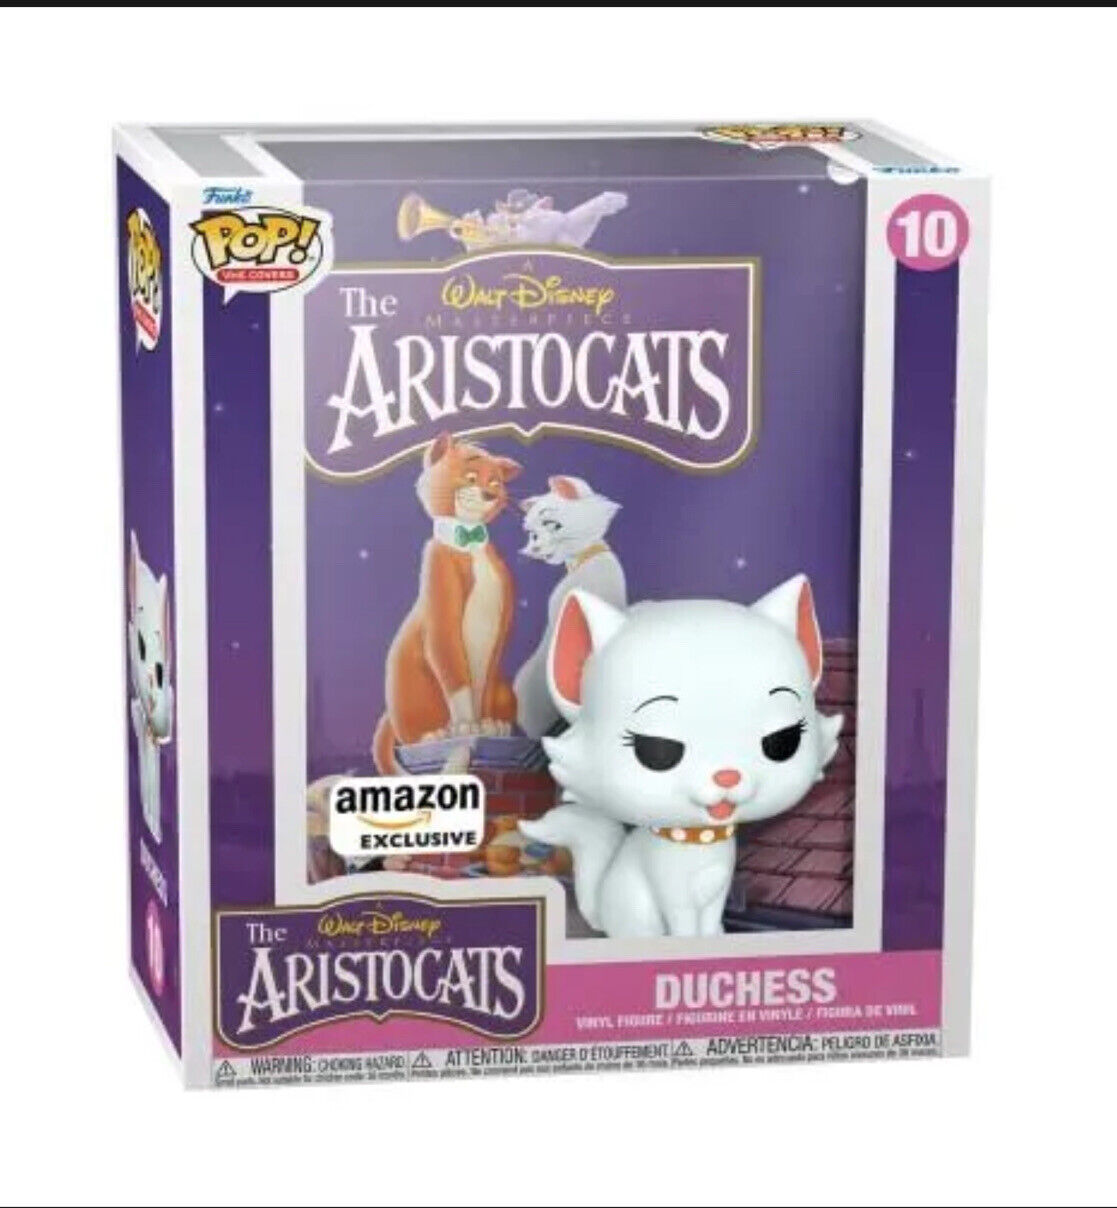 Figura Duchess PT The Aristocats Disney Amazon Exclusive Amazon